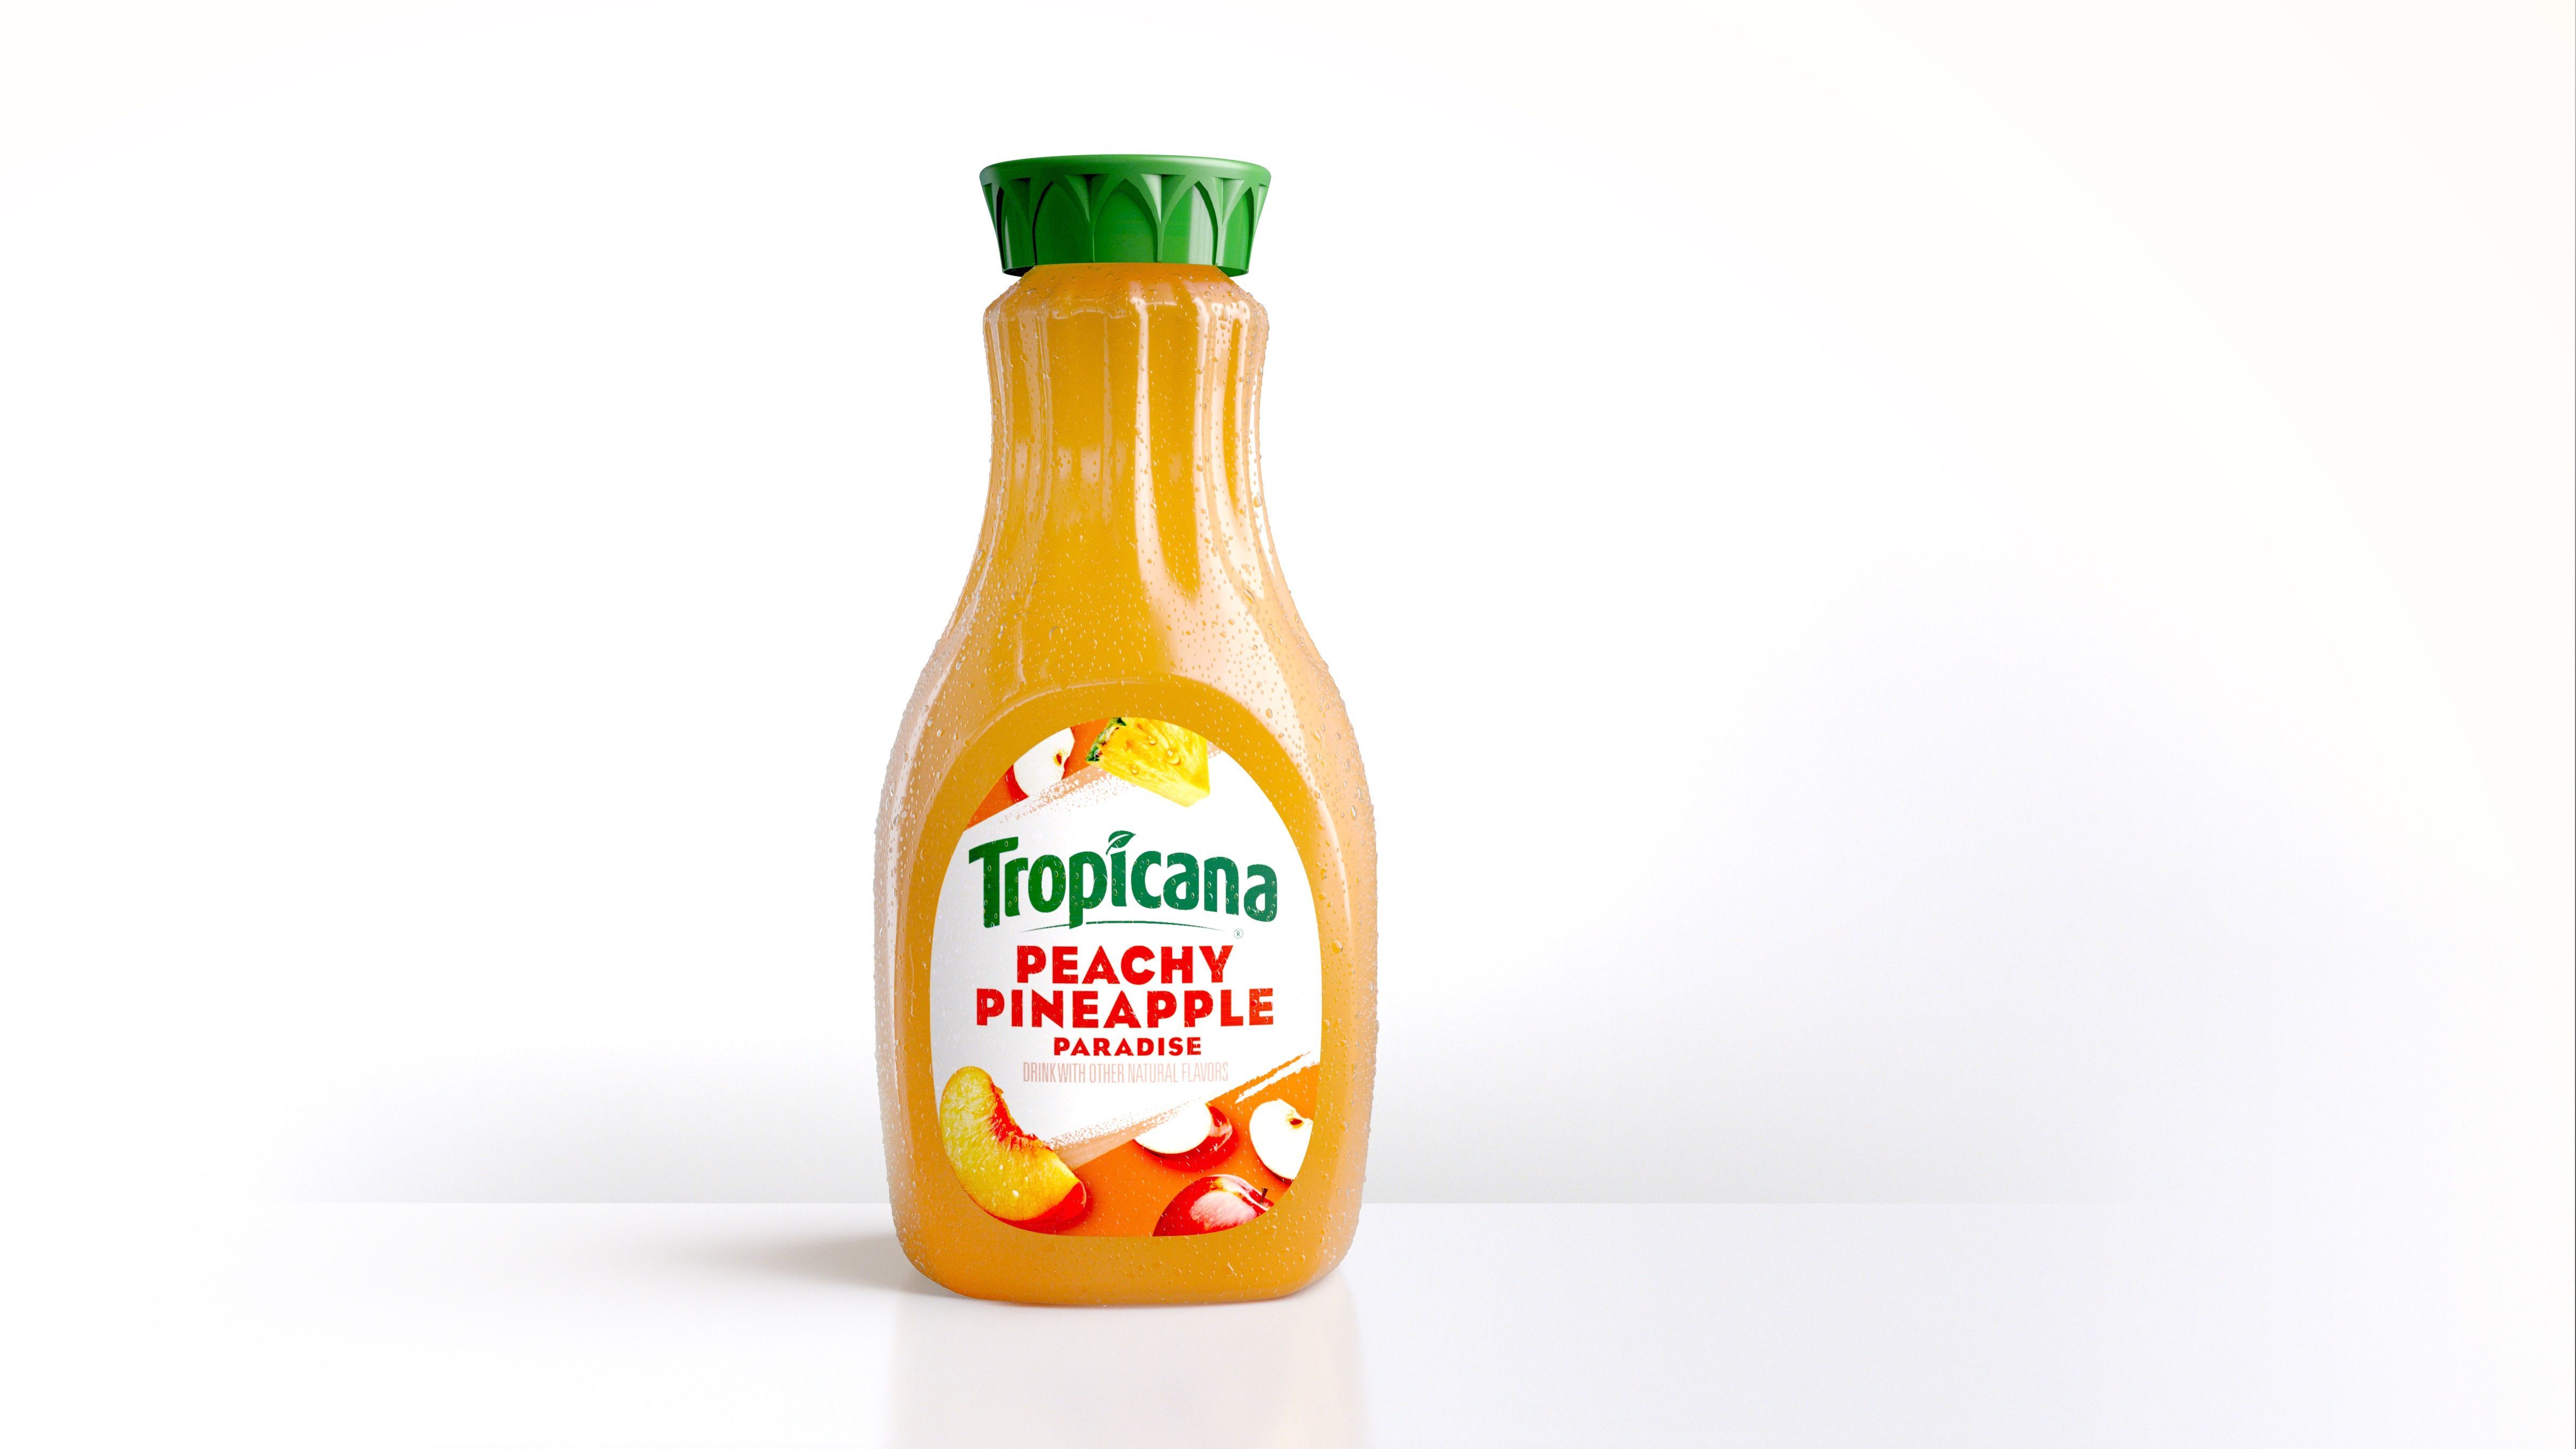 Tropicana Premium Peachy Pineapple Paradise